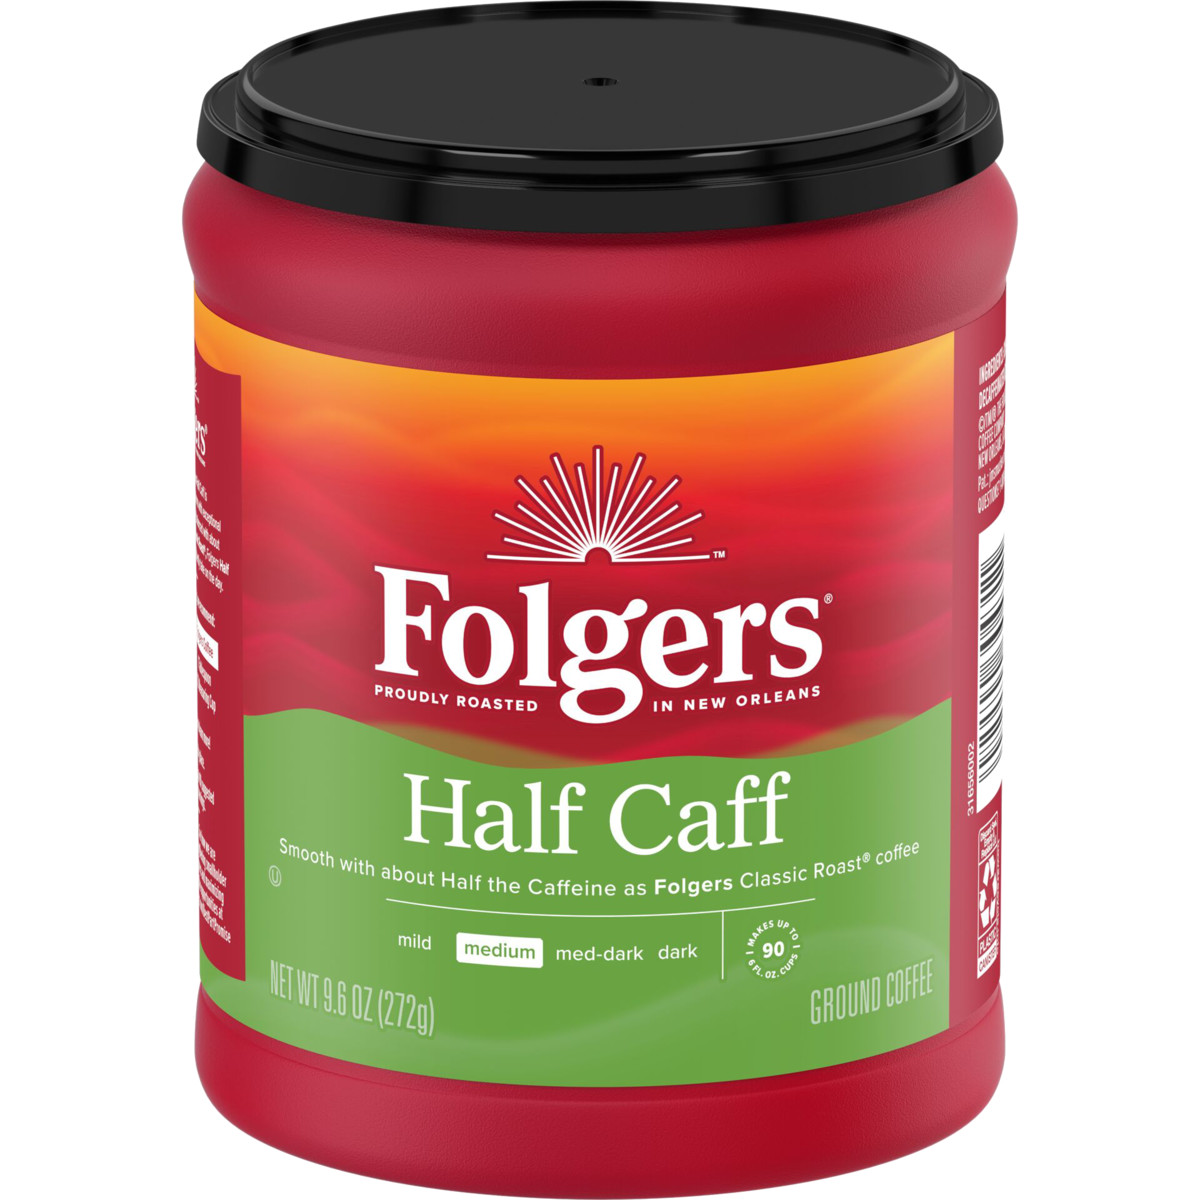 Folgers® 1/2 Caff Coffee 